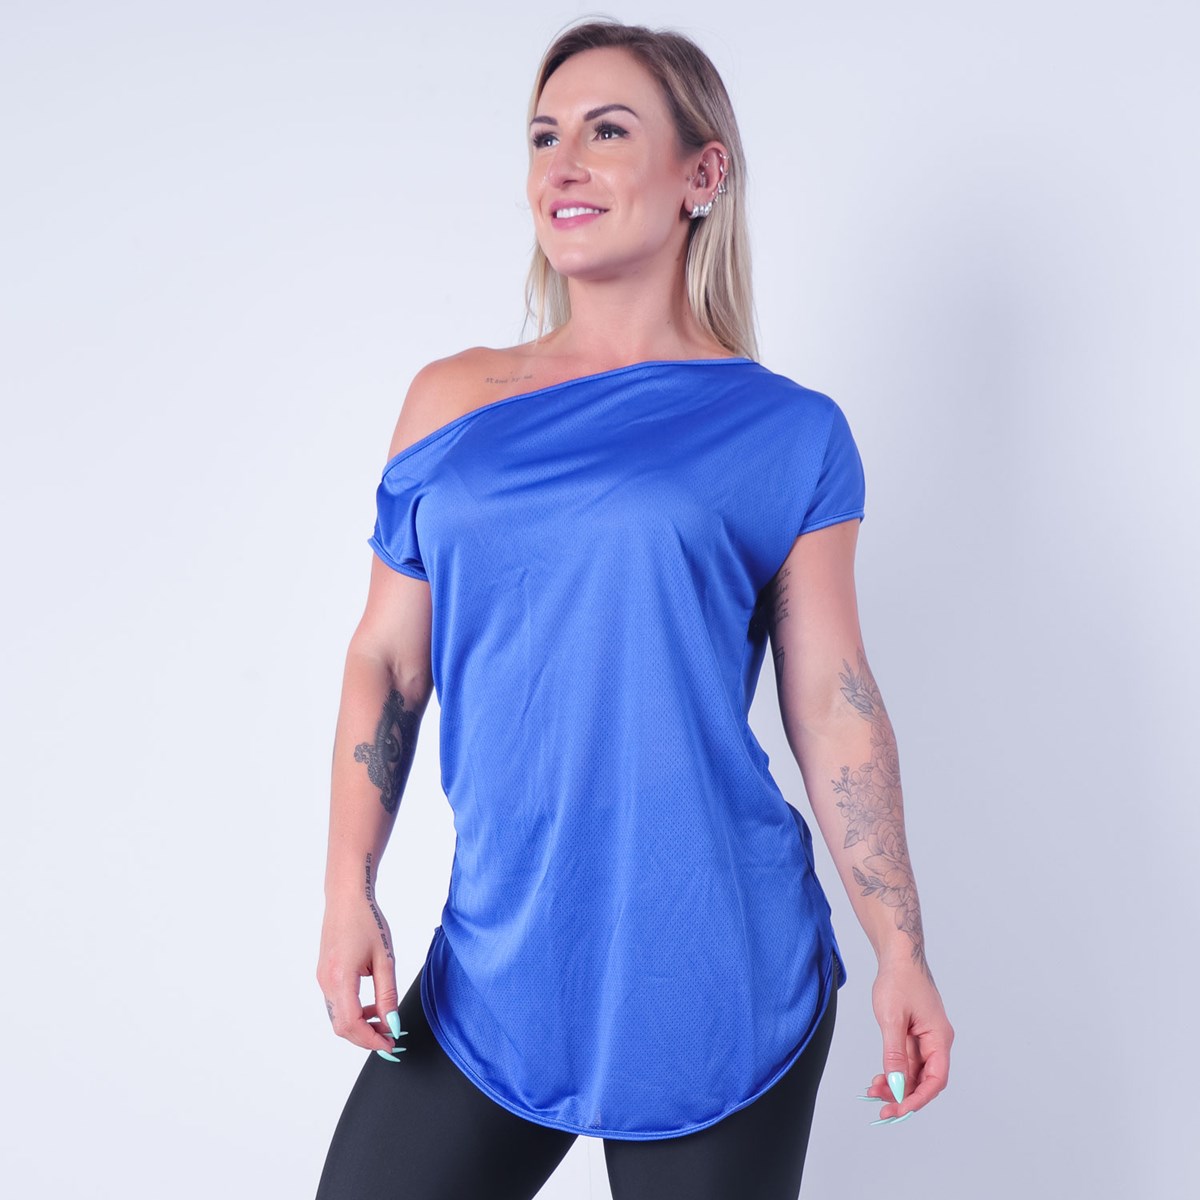 Blusa Azul Ombro Só em Dry Fit | Ref: 3.3.2434-06